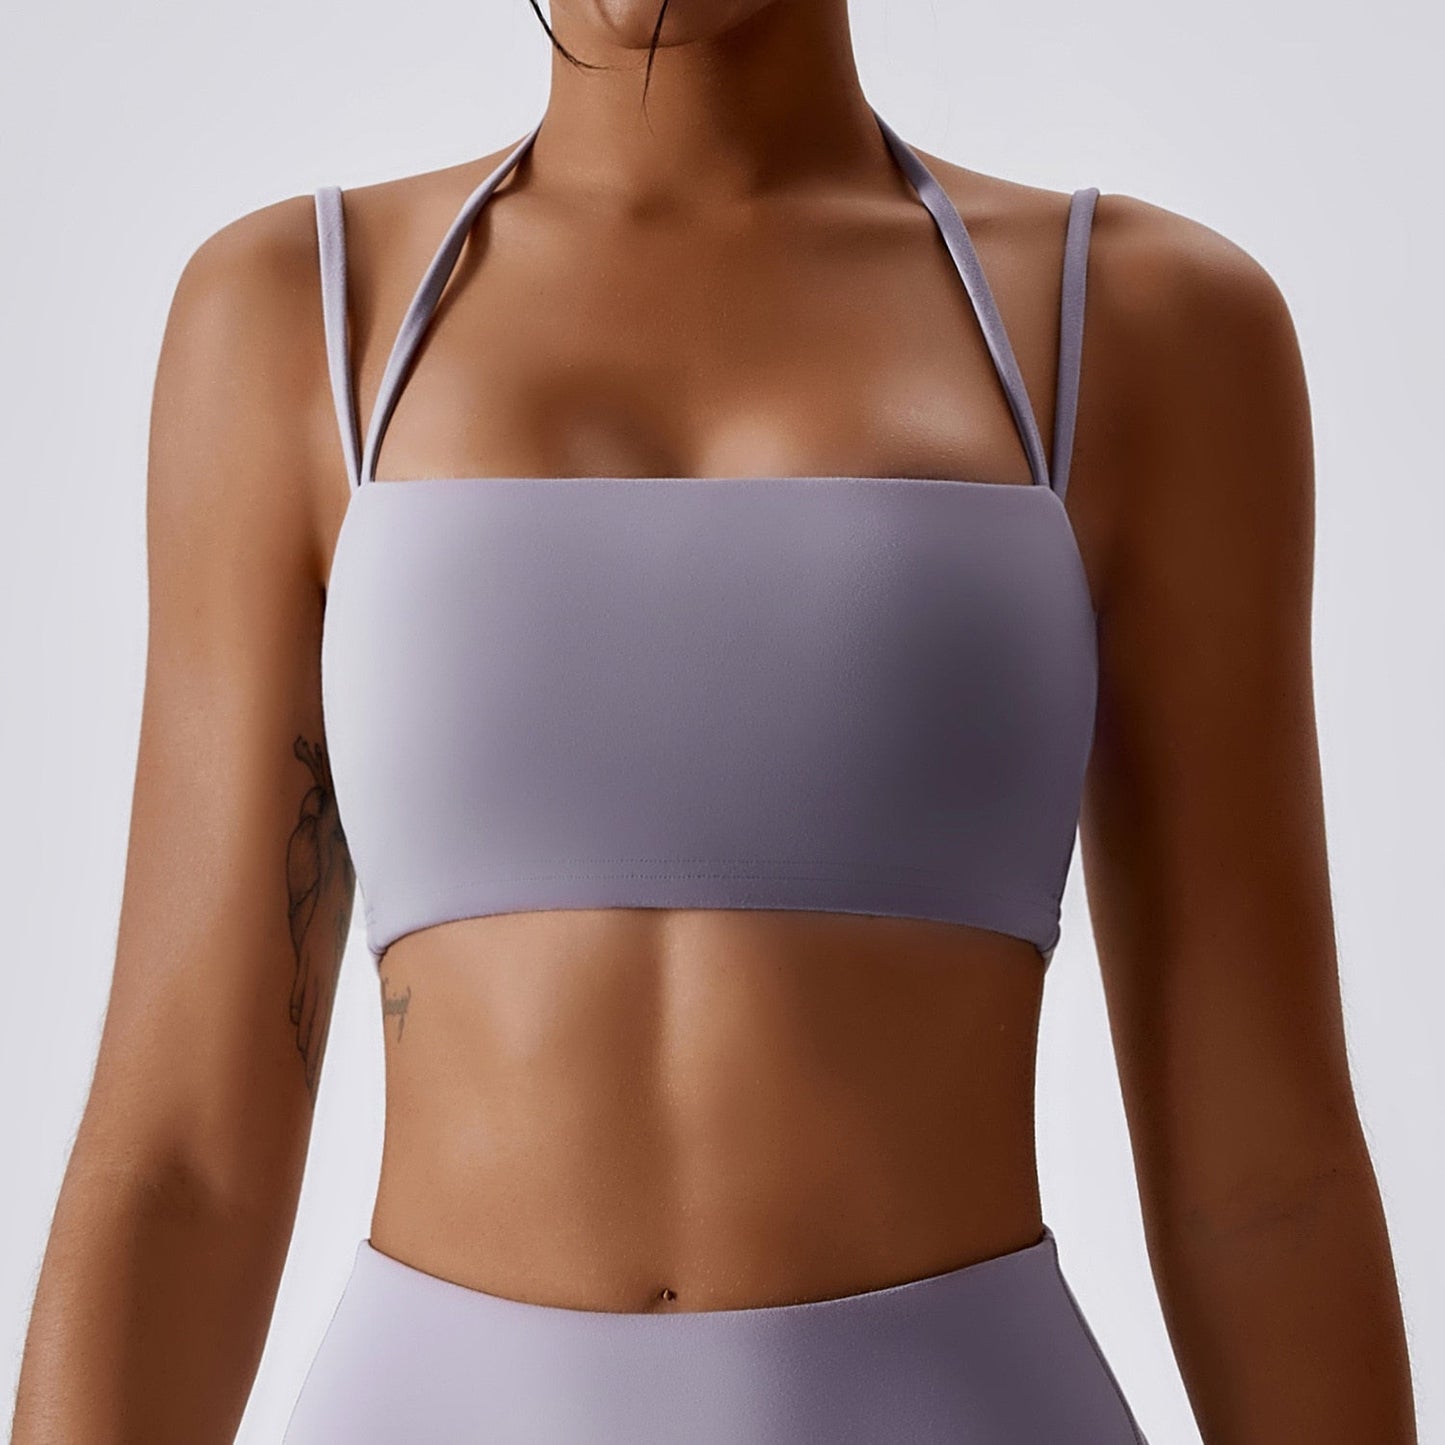 Women's Sports Underwear Gym High Strength Fitness Vest Shockproof Tight Quick-Drying Yoga Bra Outdoor Running Back Yoga Top PurplishgreyChinaXL  59.99 EZYSELLA SHOP